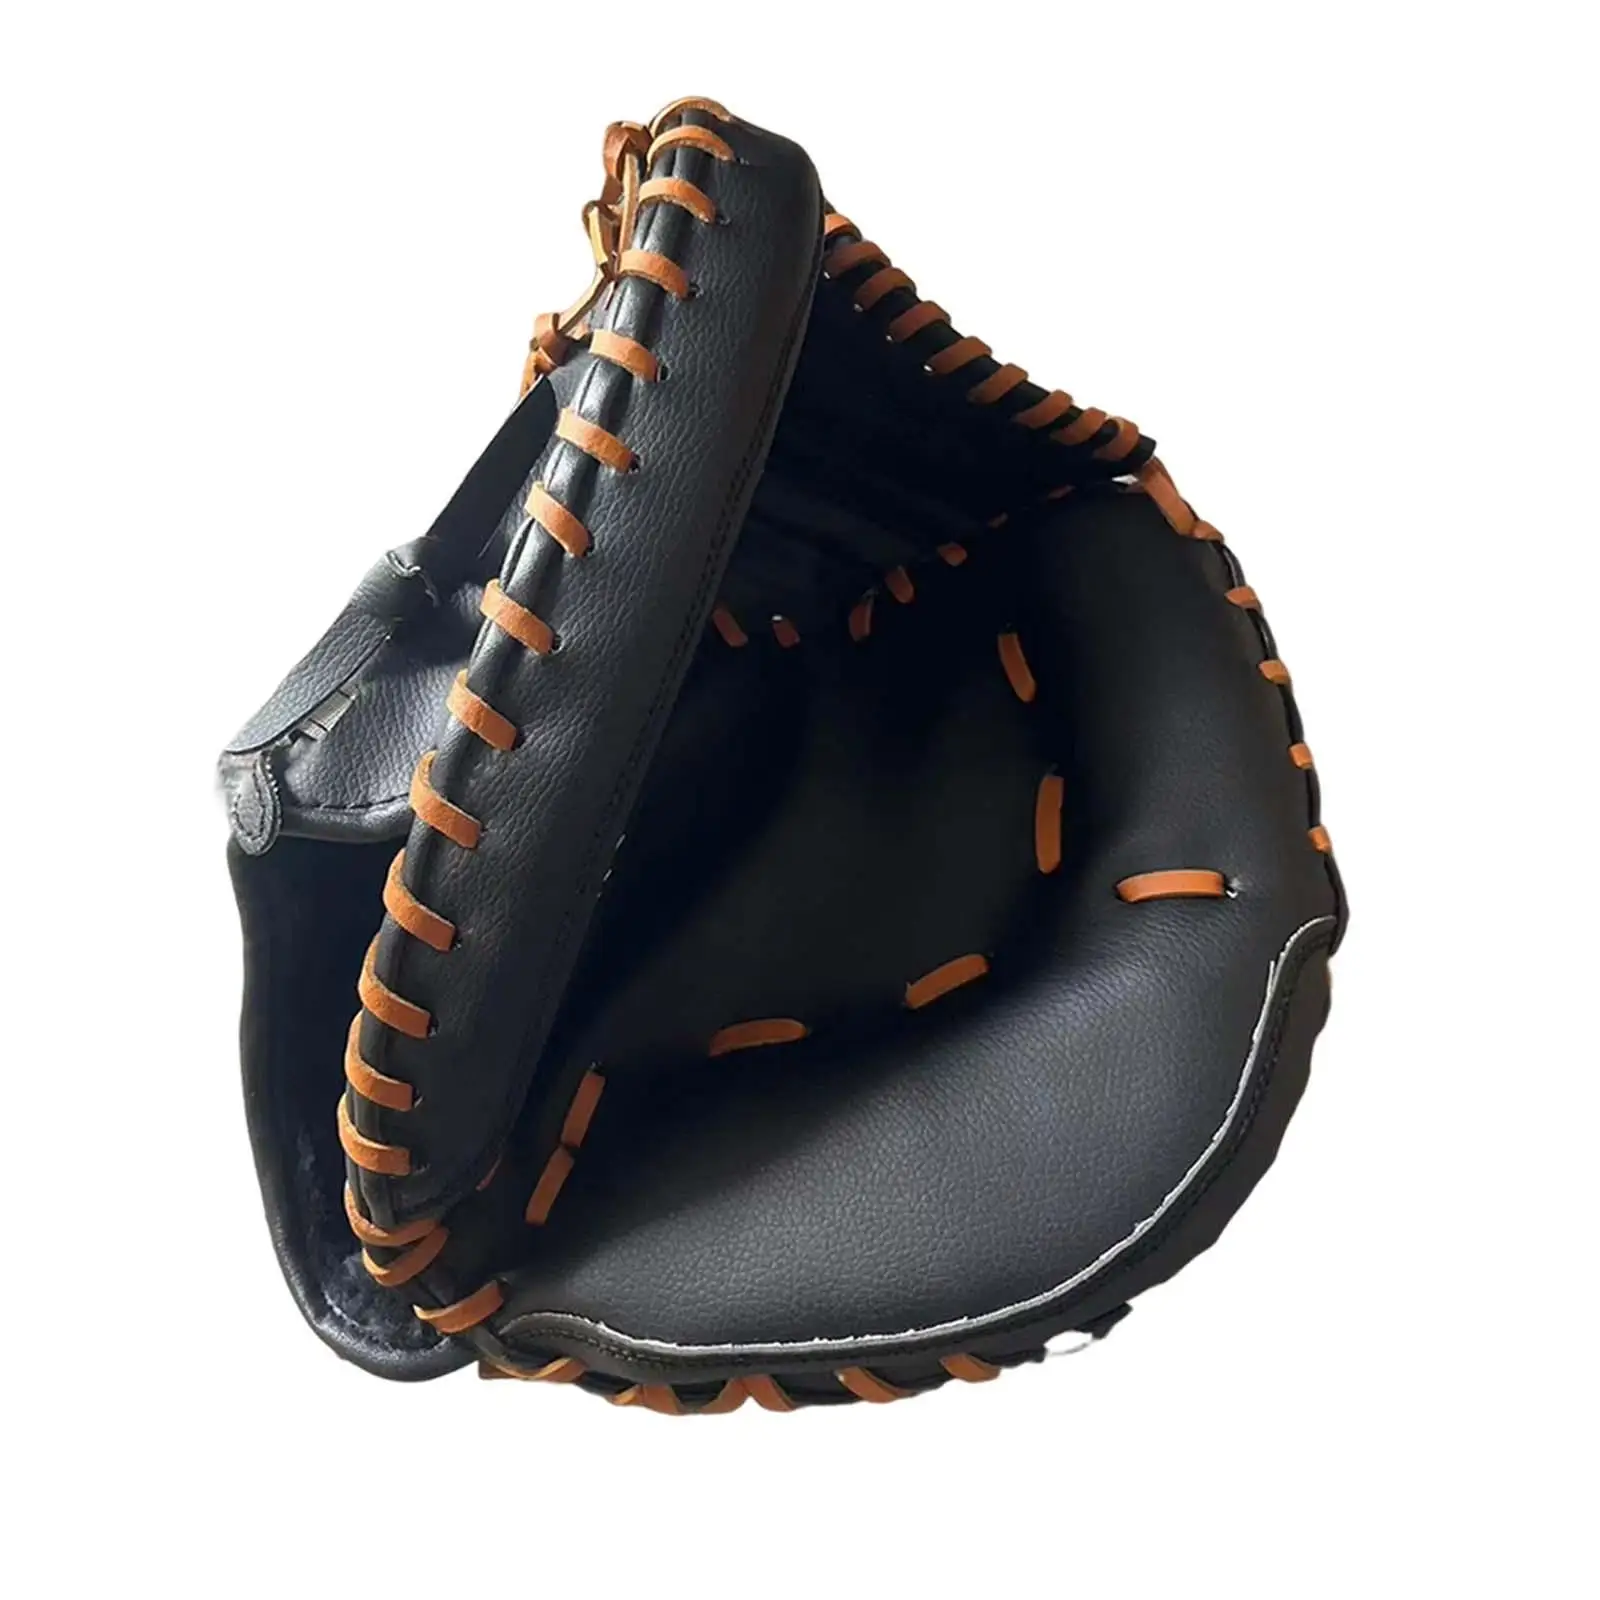 Thicken Baseball Glove Batting Gloves PU Leather Softball Glove Left Hand Teeball Glove 12.5